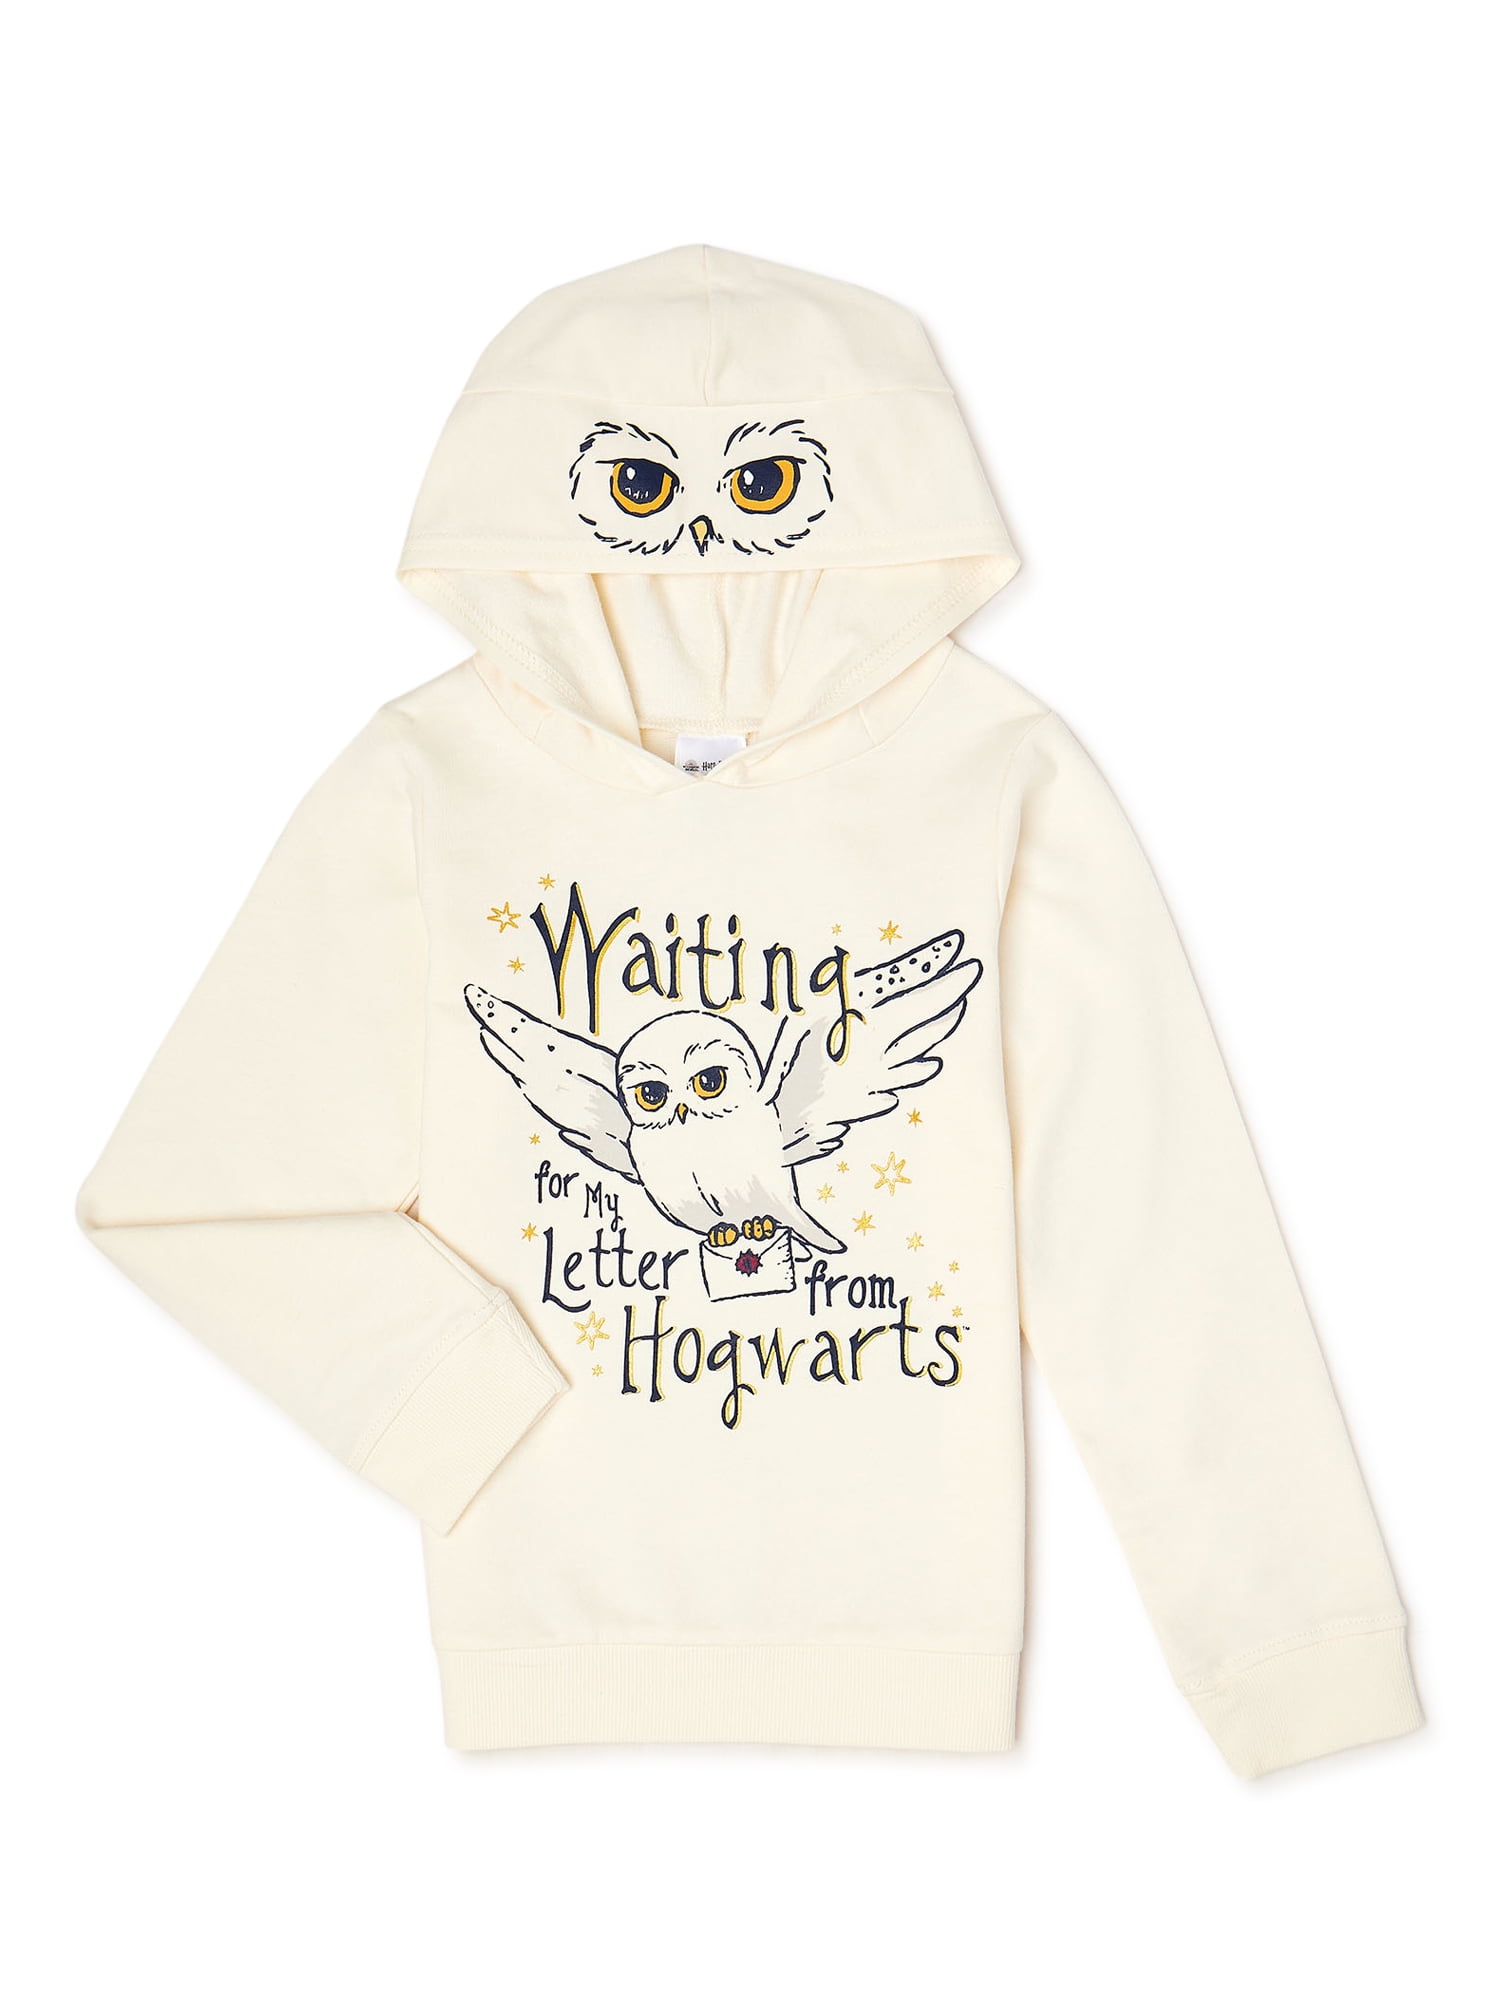 Harry potter fleece Sweater embroidery warm school Uniform pullover Hoodies 